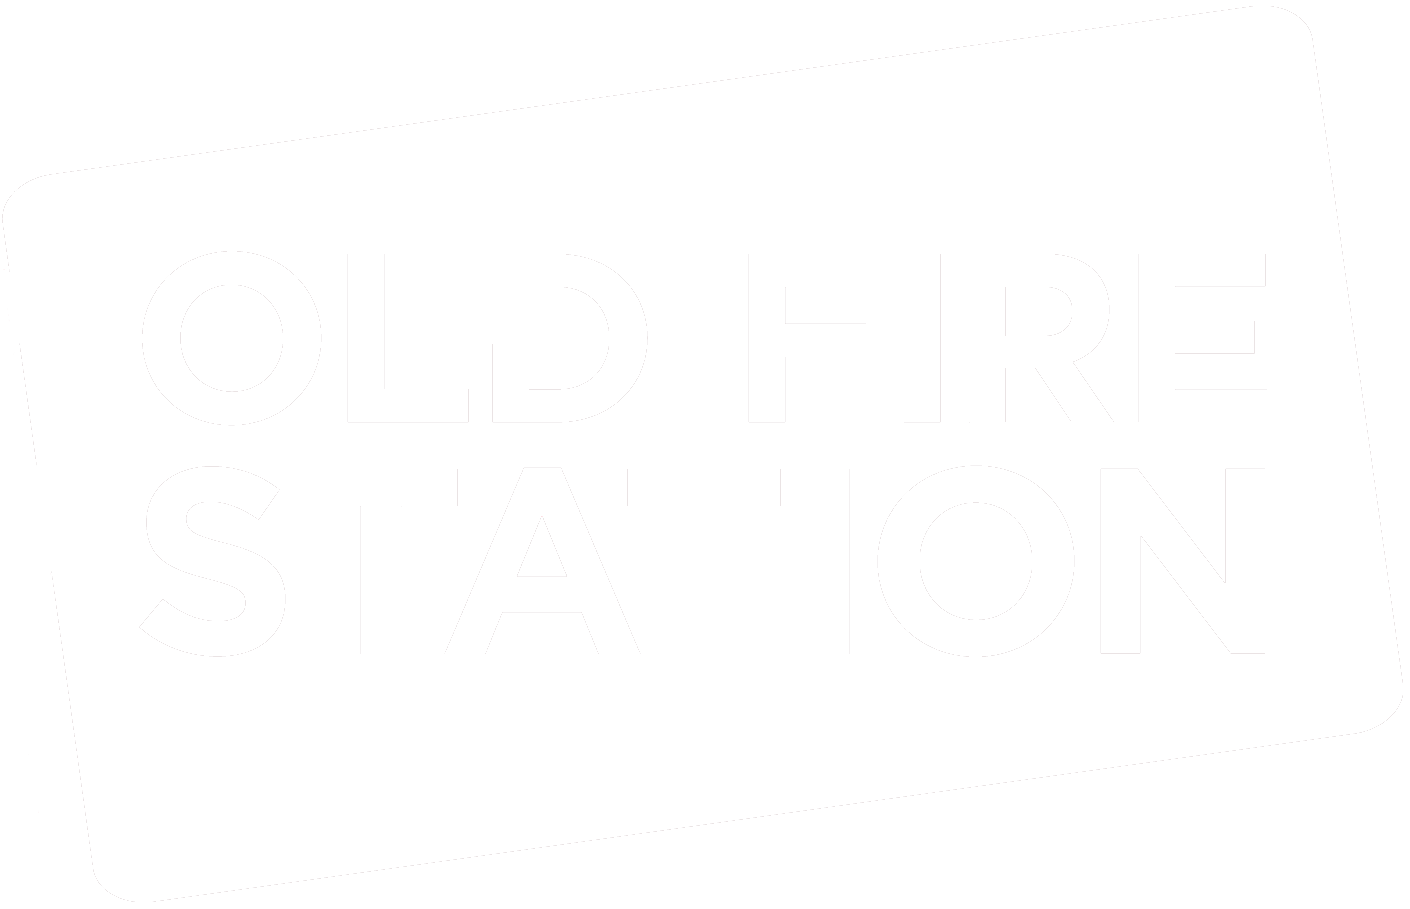 OLD FIRE STATION LOGO WHITE